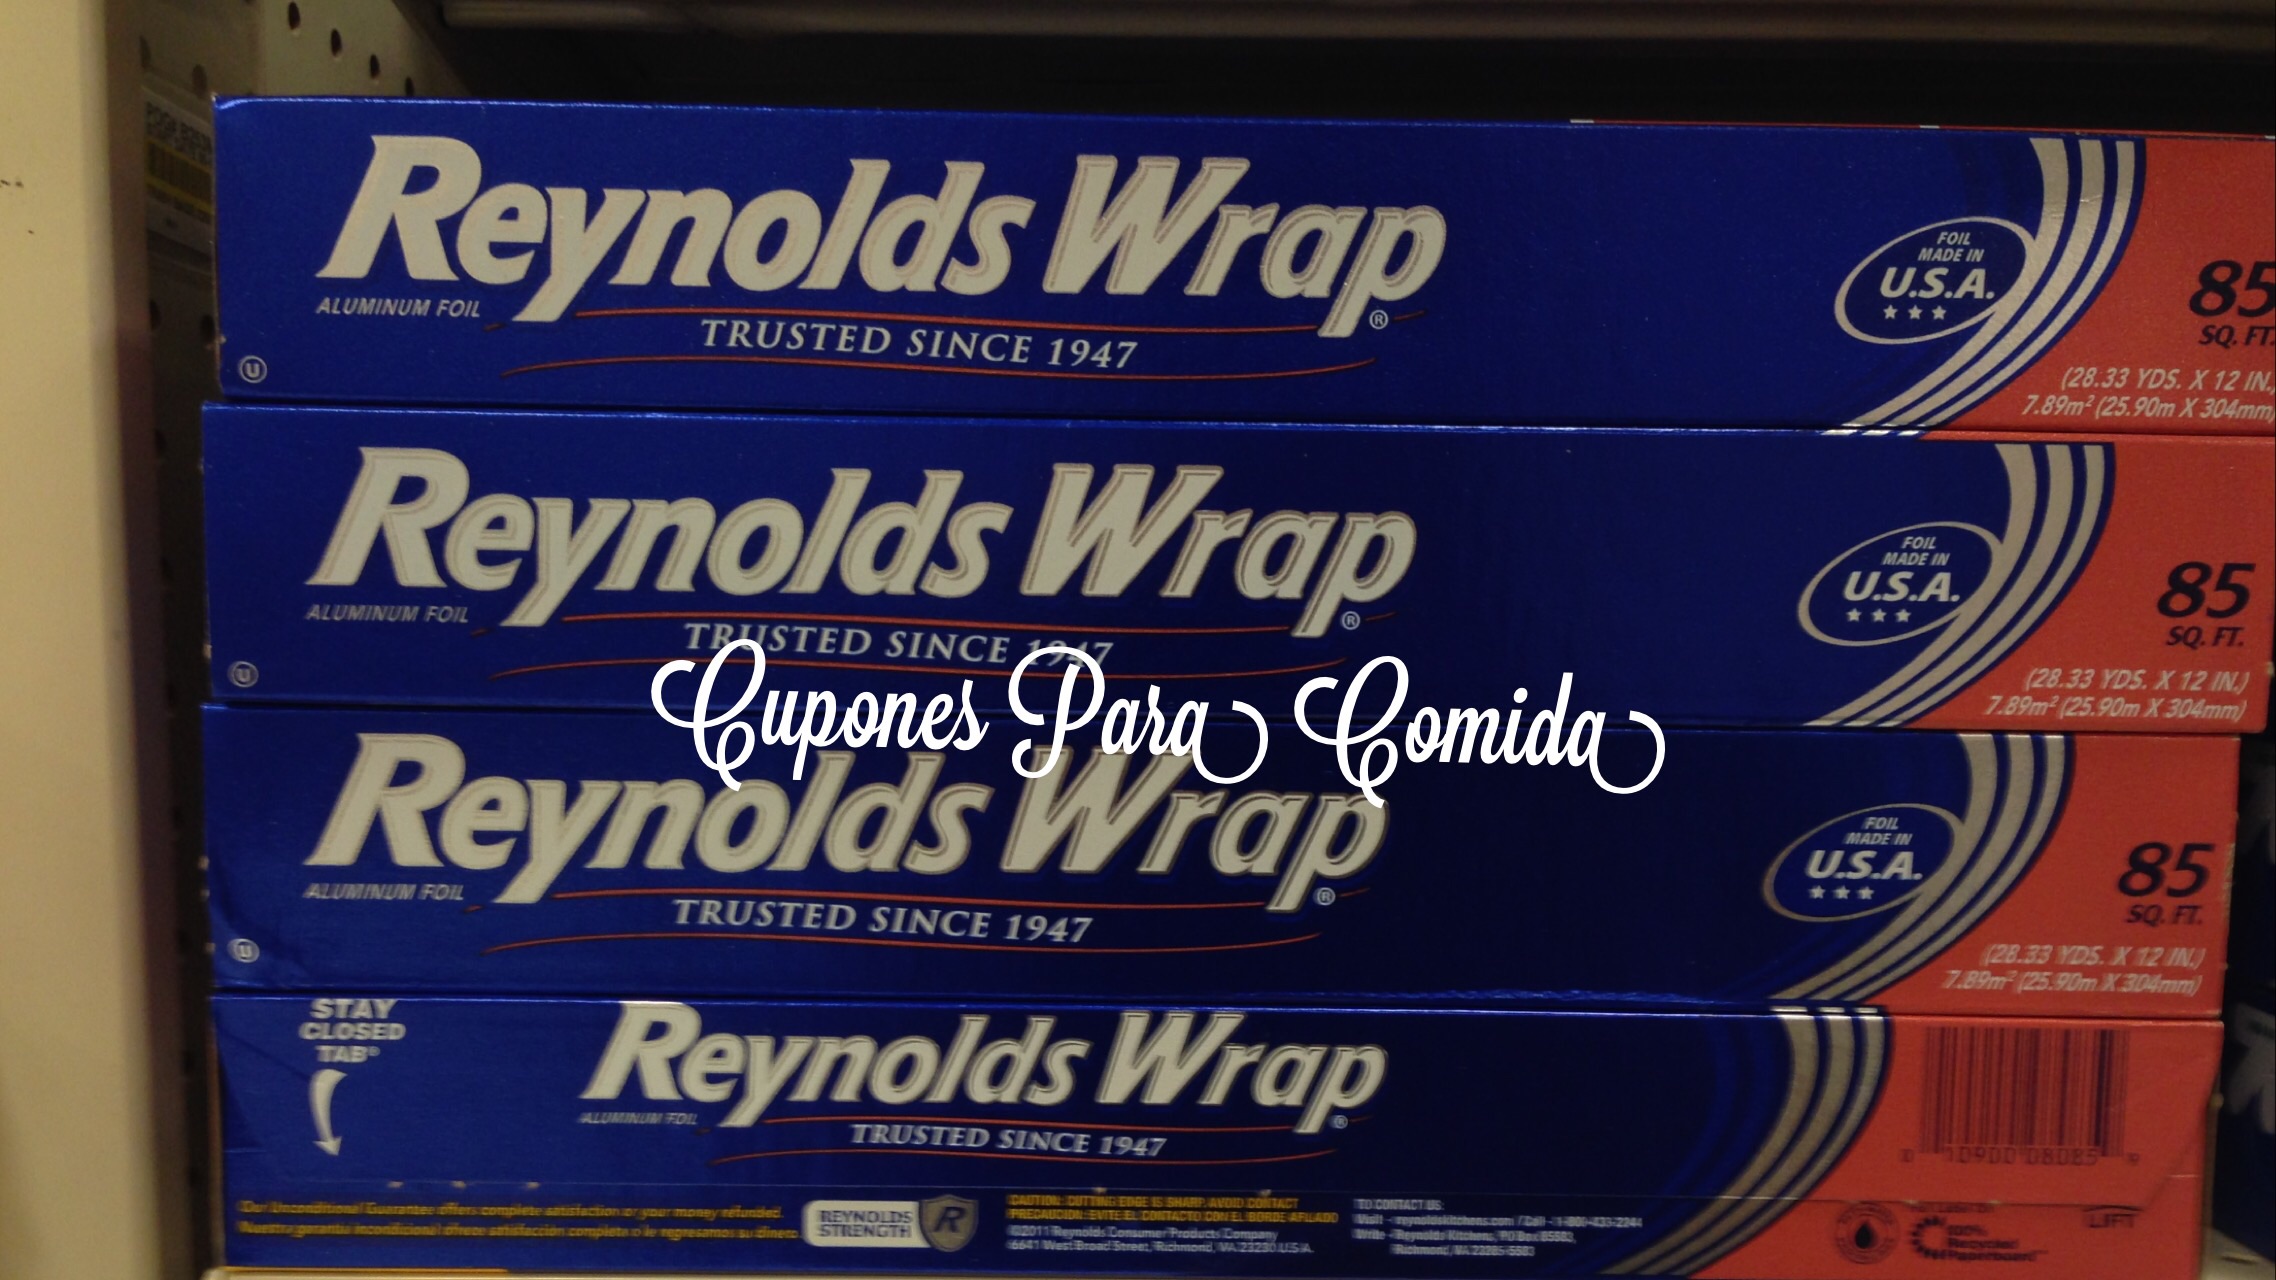 Raynolds Wrap